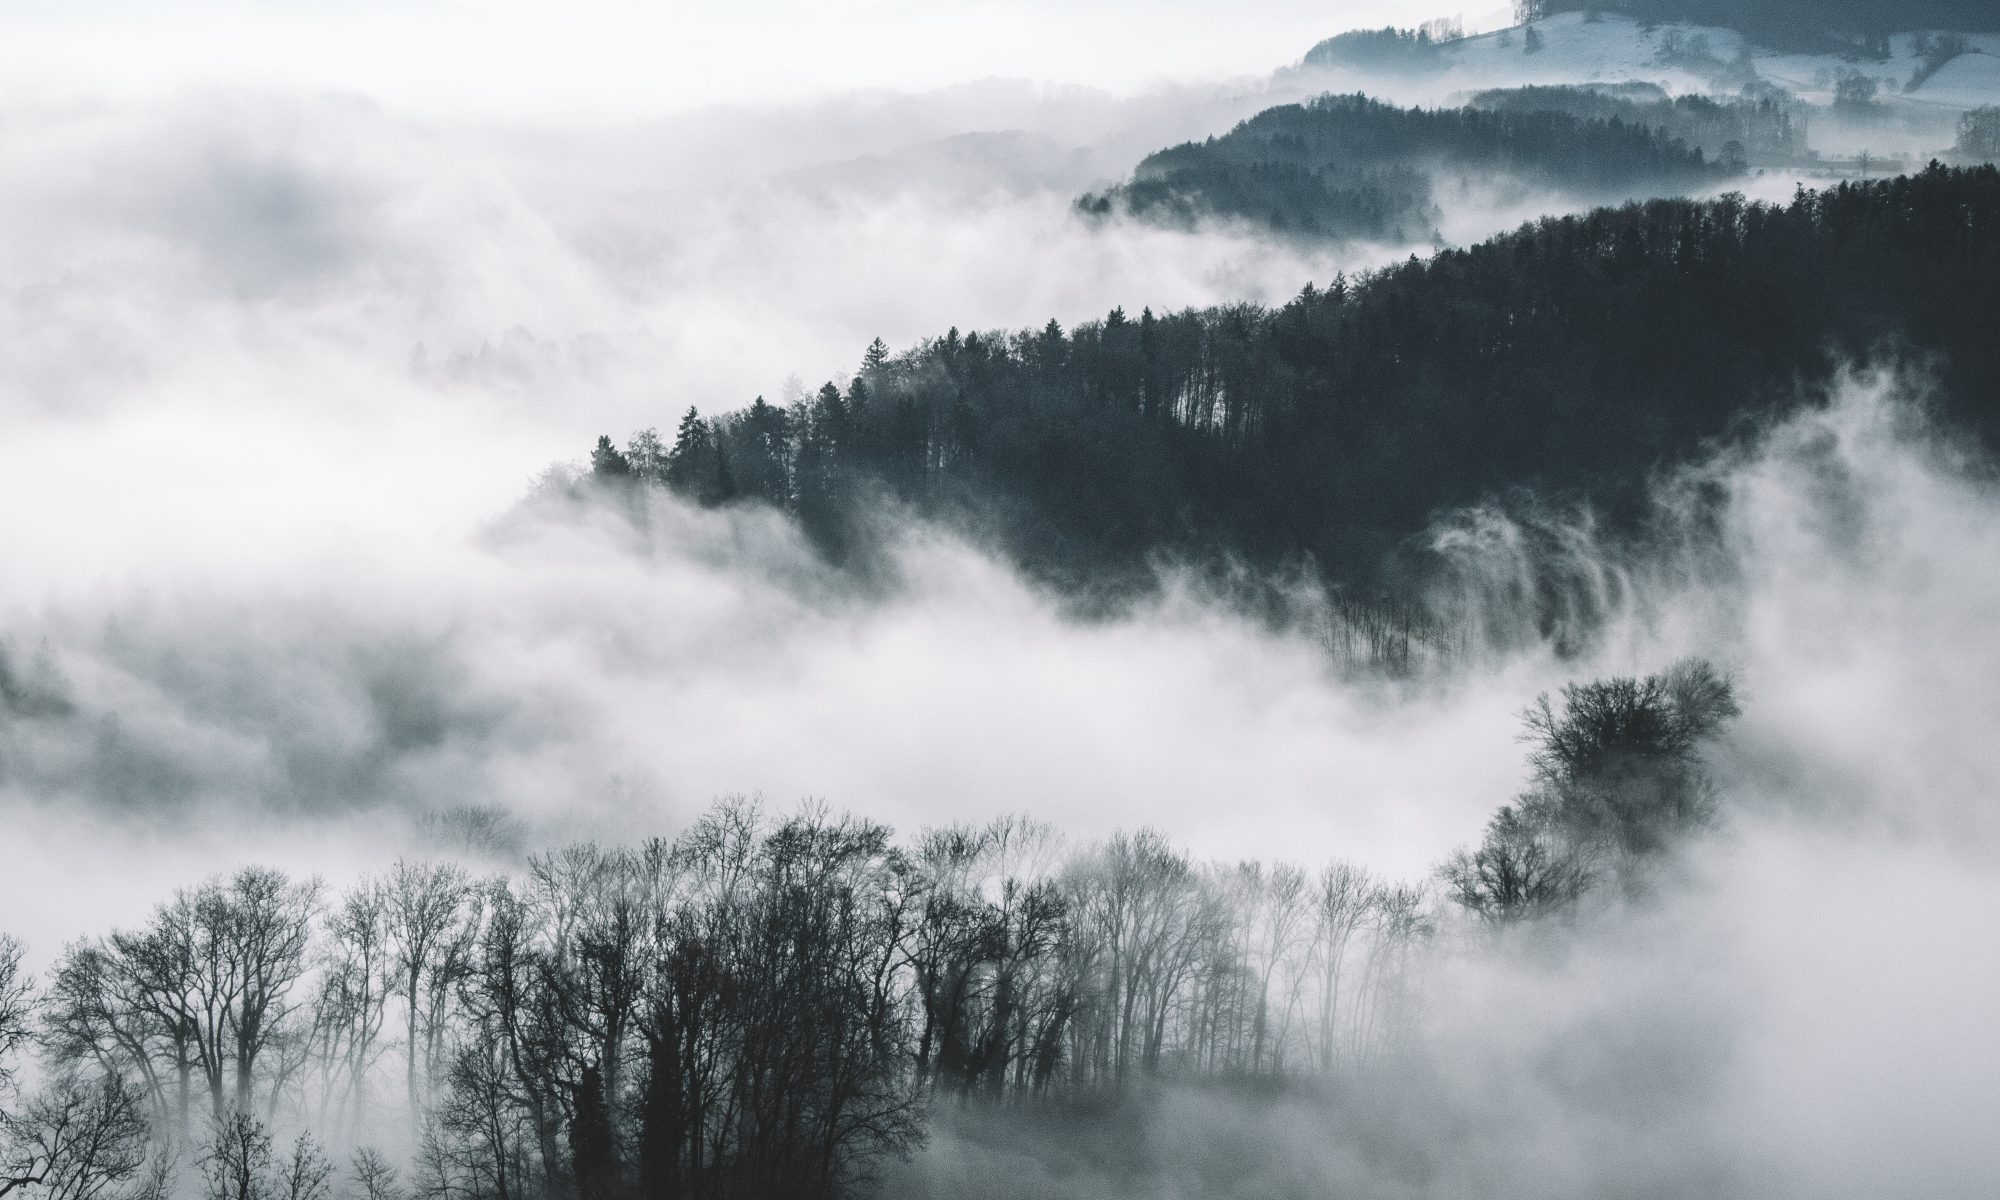 Sea of Fog by Yannick Pulver via Unsplash